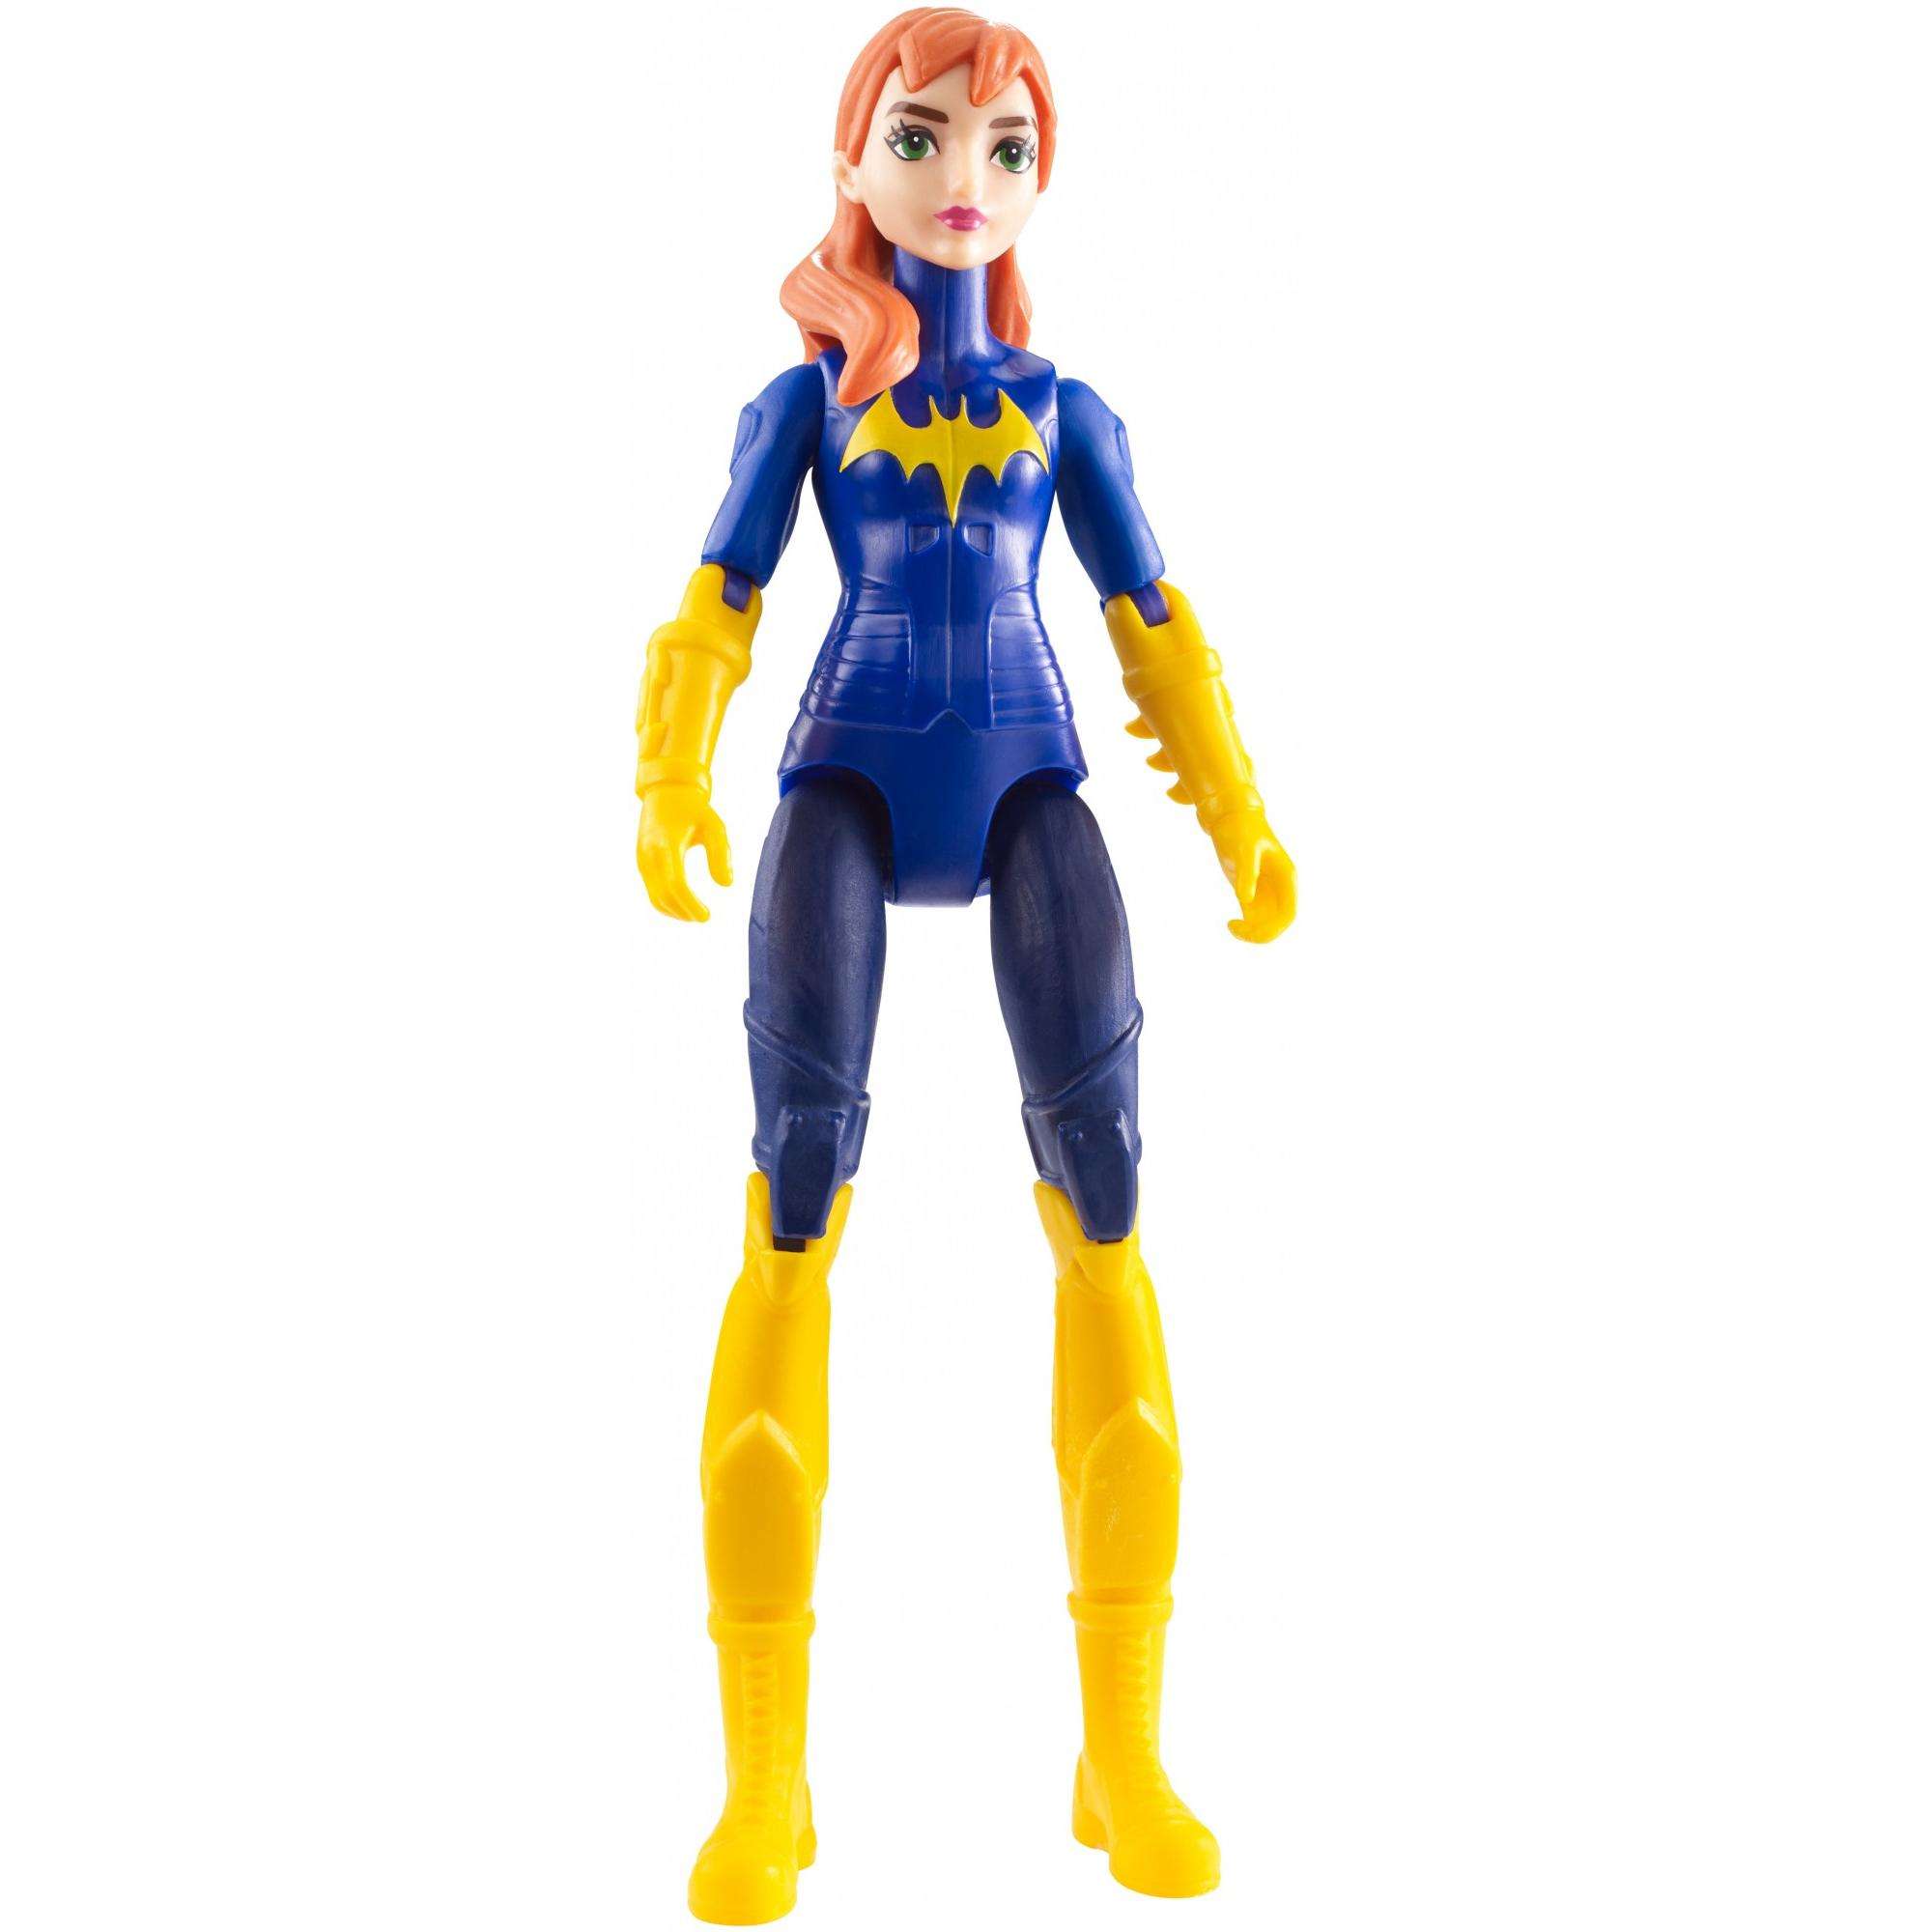 DC Super Hero Girls Batgirl 6-Inch Action Figure with Batjet - image 3 of 8